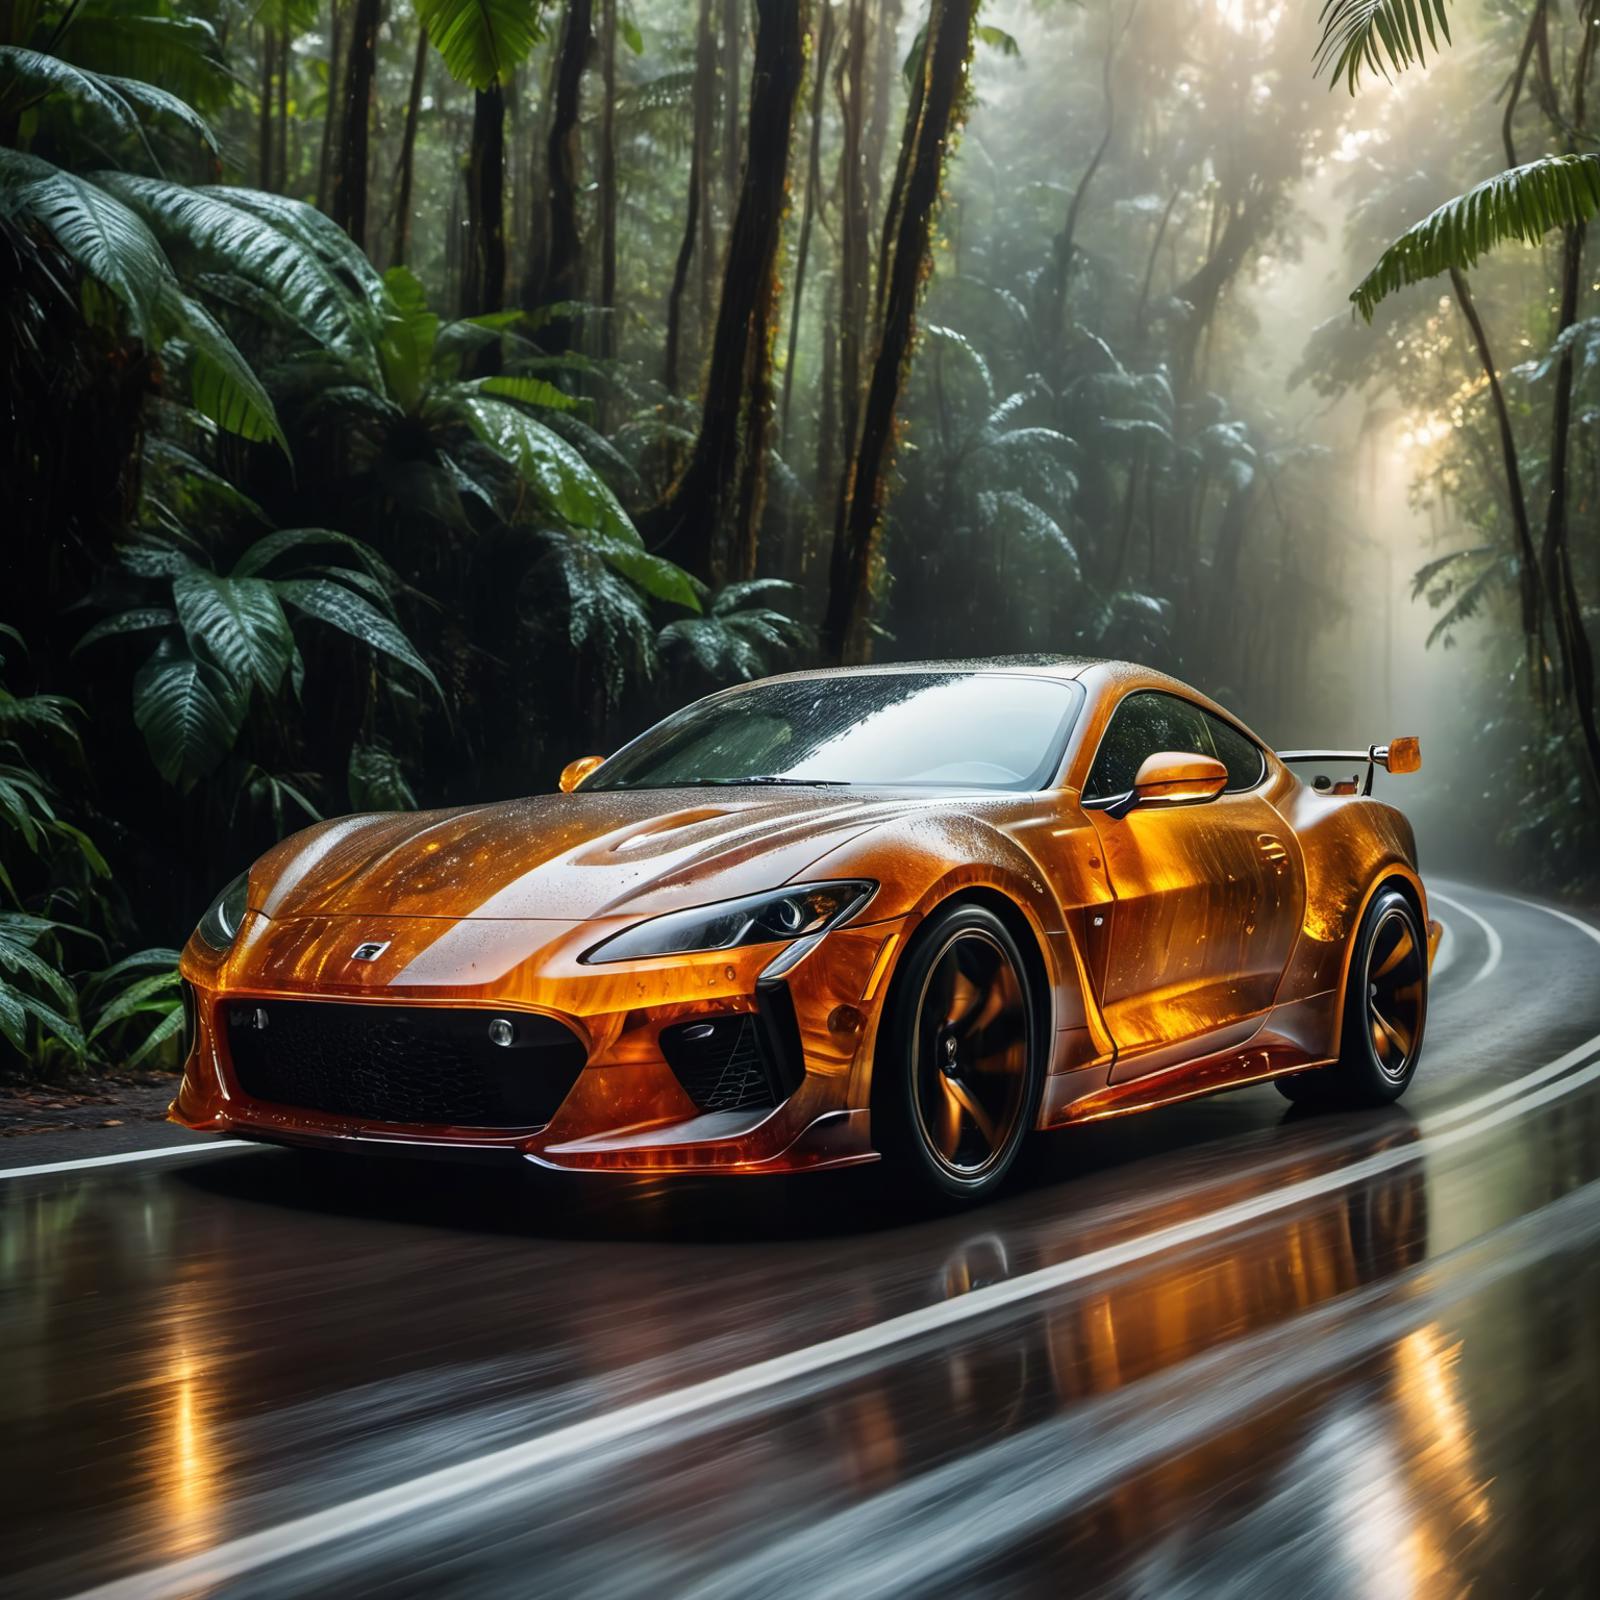 A Sleek Orange Sports Car Driving Through a Rainy Forest